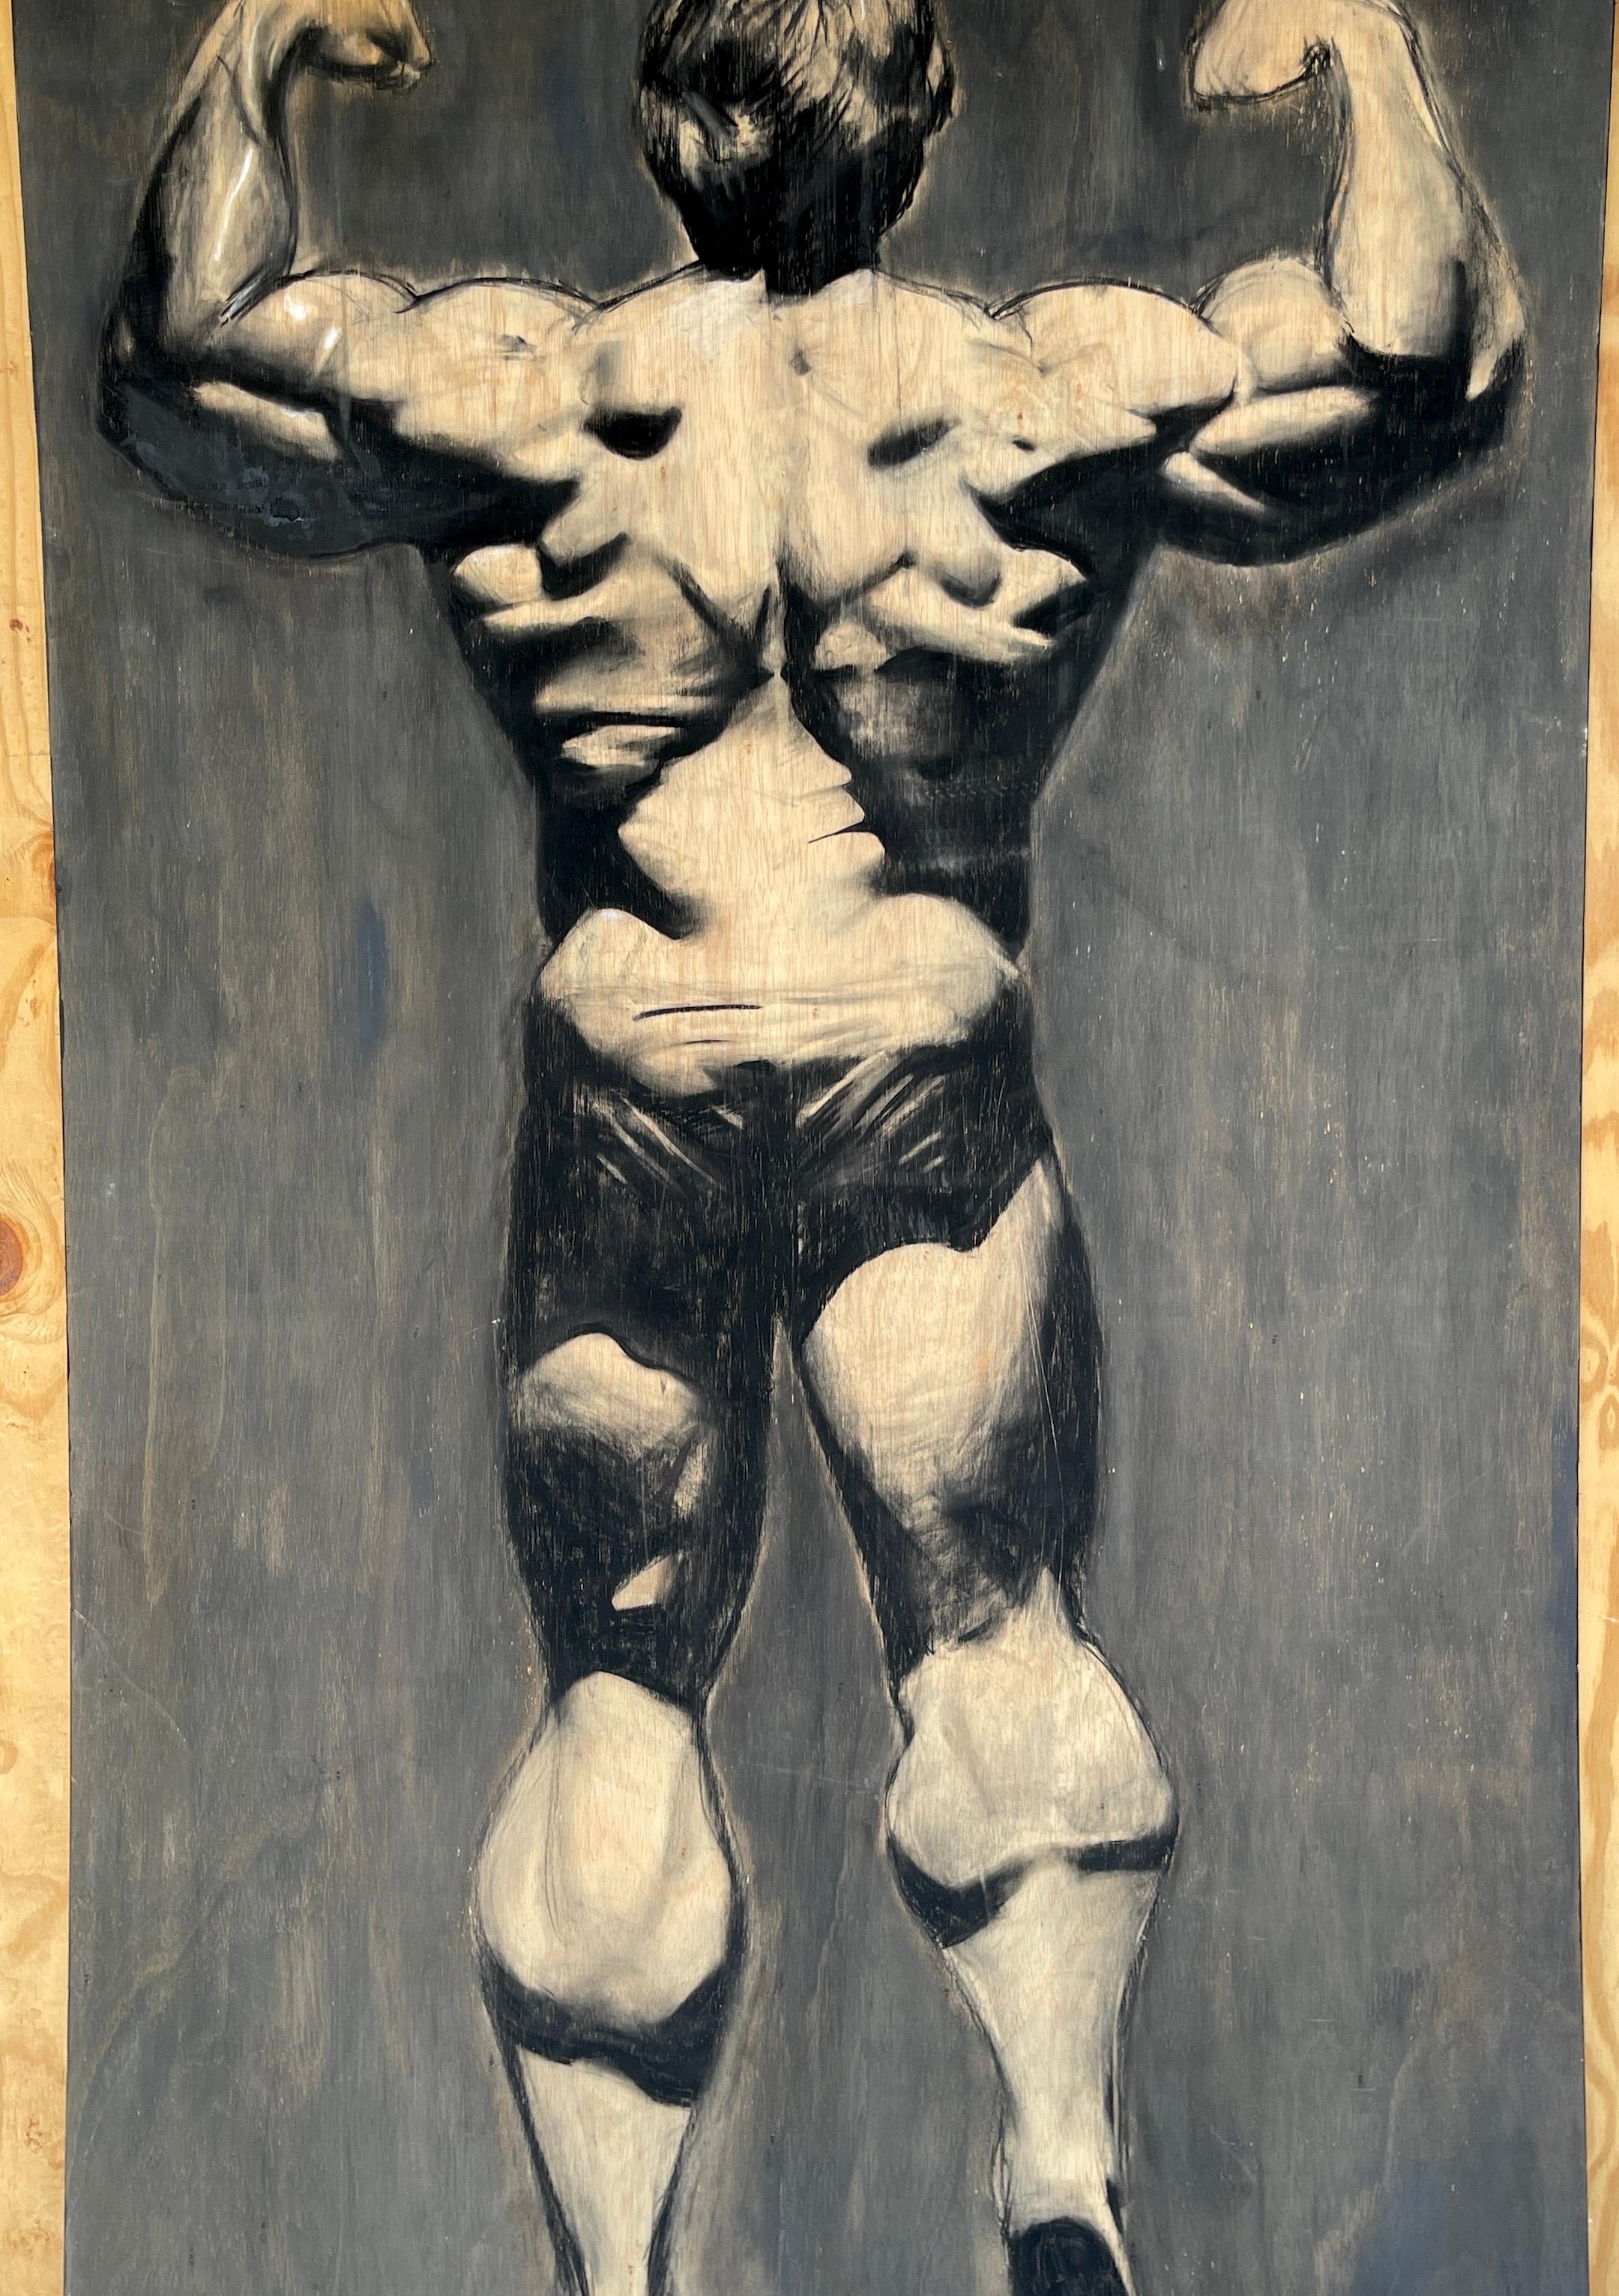 Plywood Massive Black & White Painting of Arnold Schwarzenegger's 'Back Double Biceps' For Sale